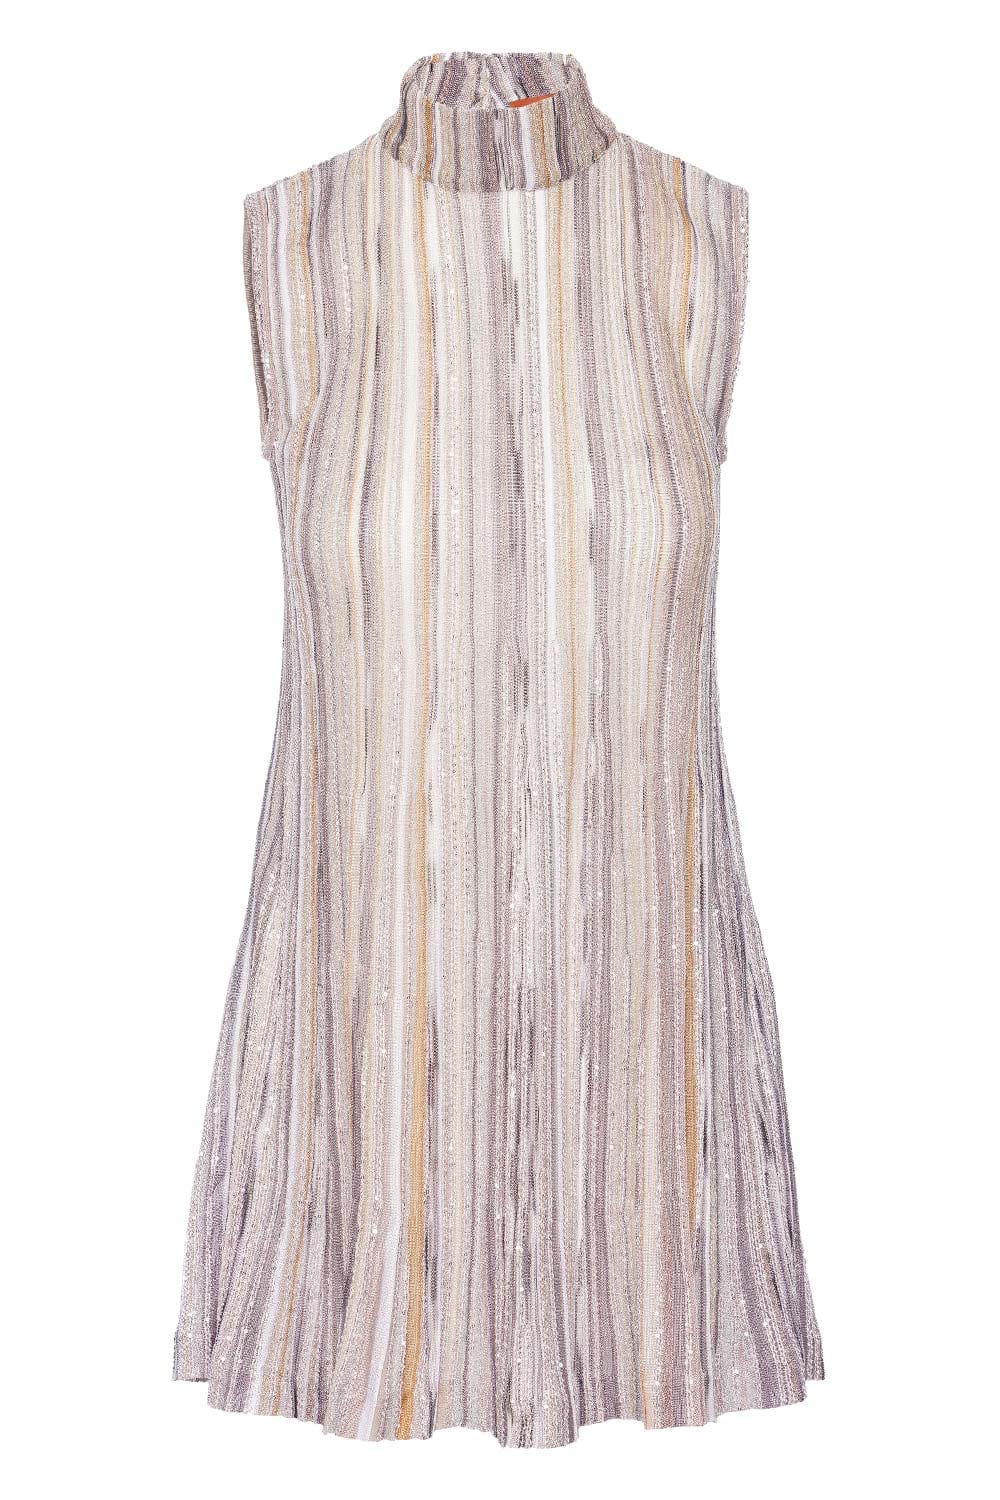 MISSONI Striped Sequin Lilac Multi Sleeveless Mini Dress